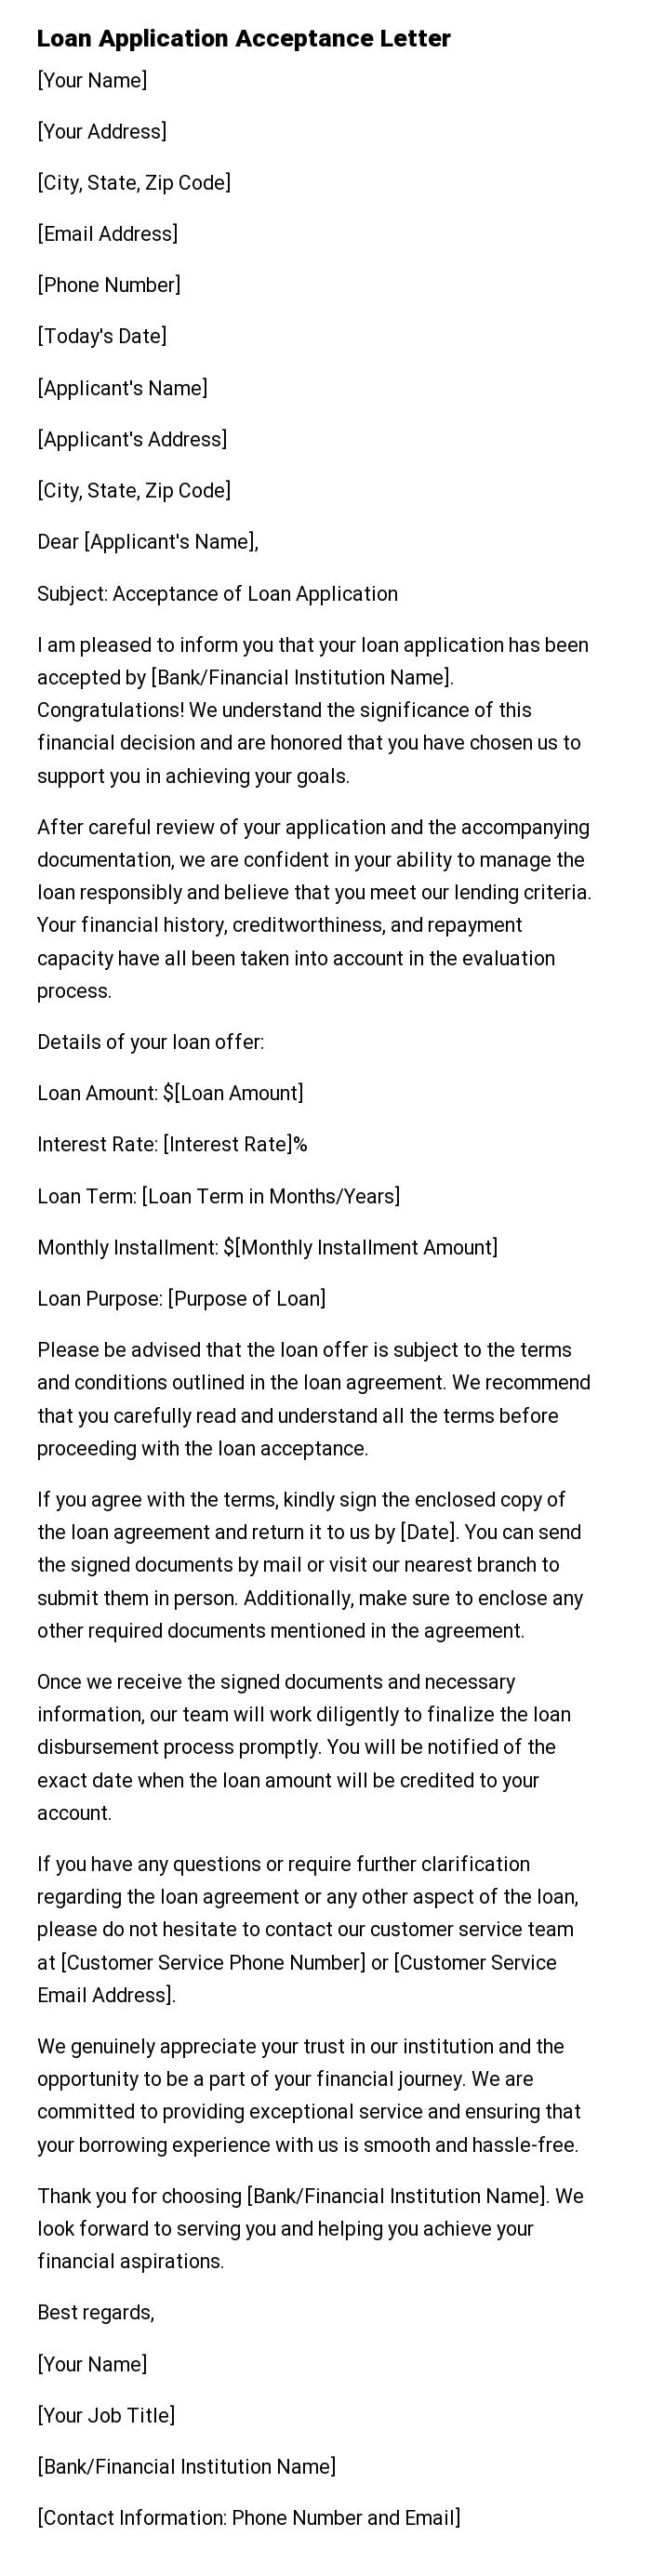 Loan Application Acceptance Letter